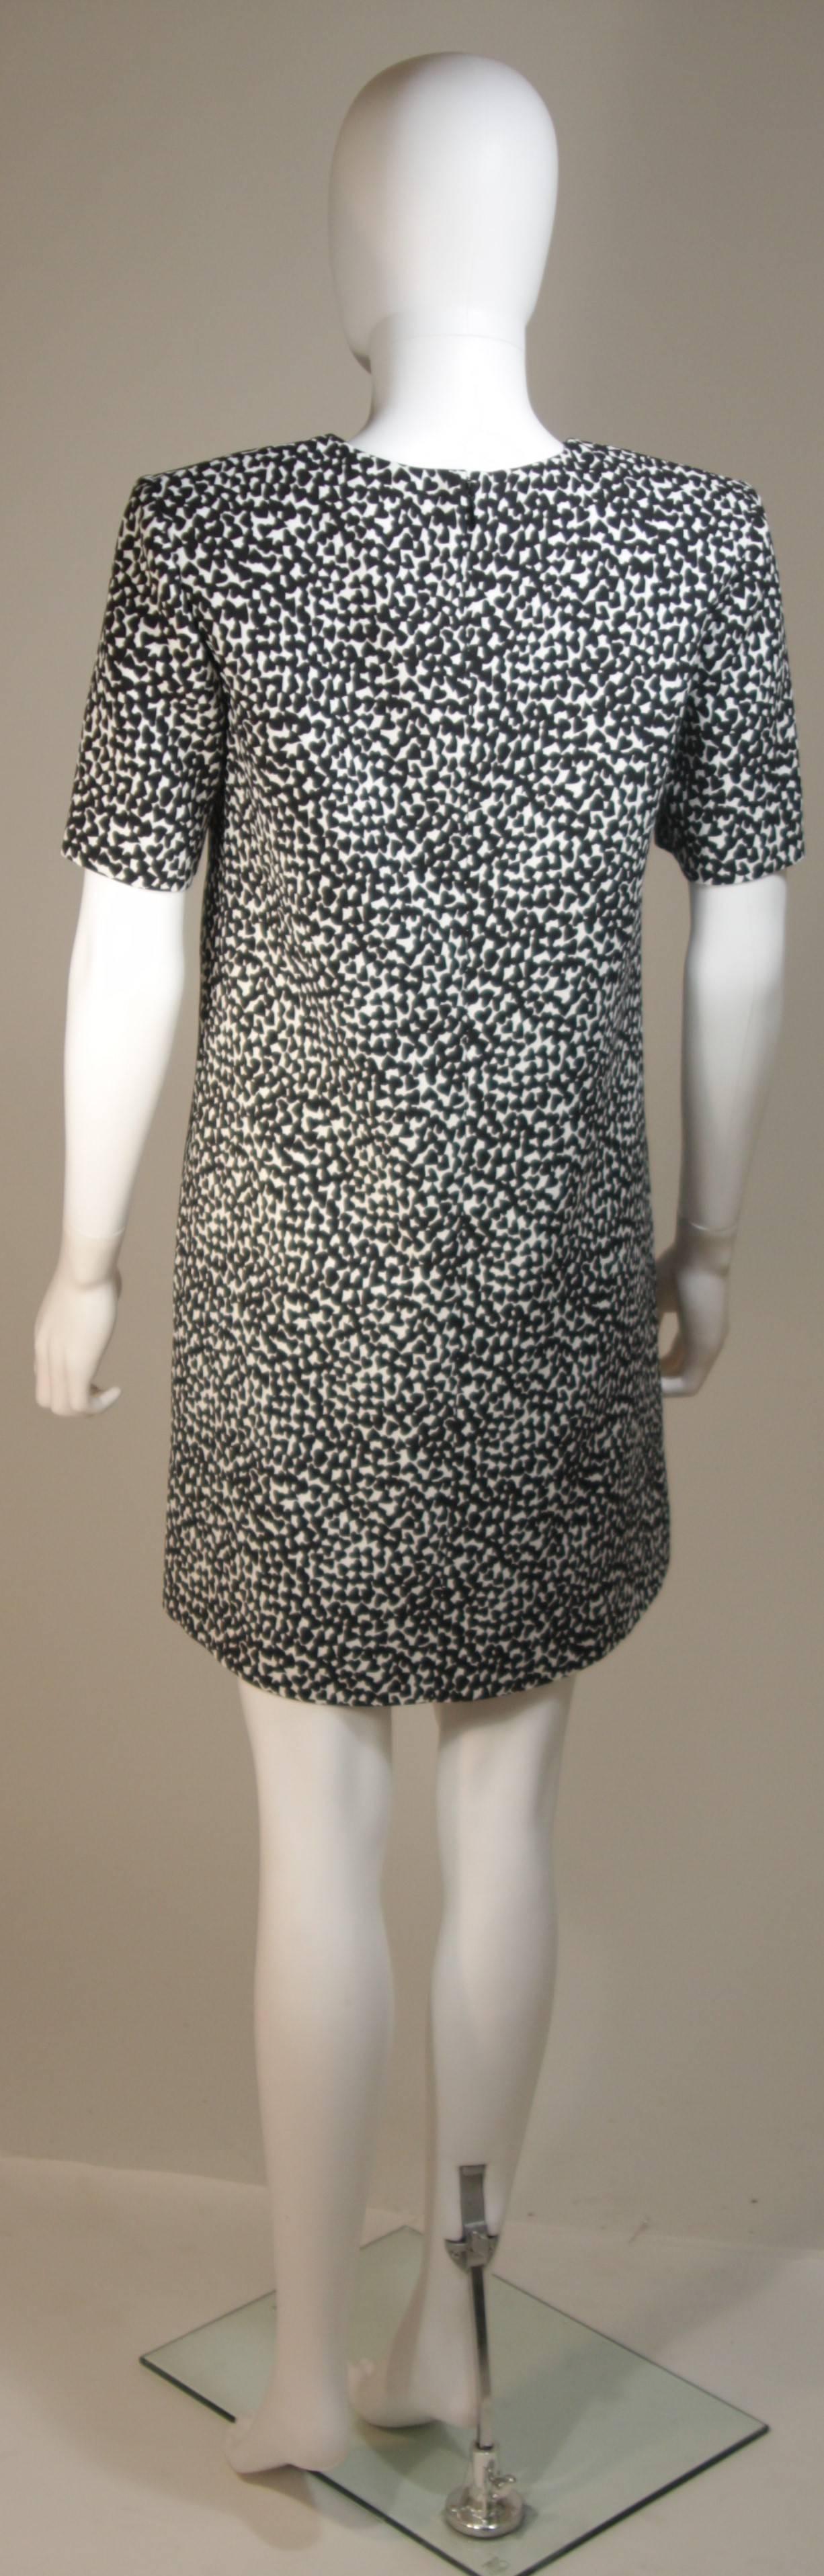 SAINT LAURENT Black and White Contrast Heart Patterned Dress 4-6 5